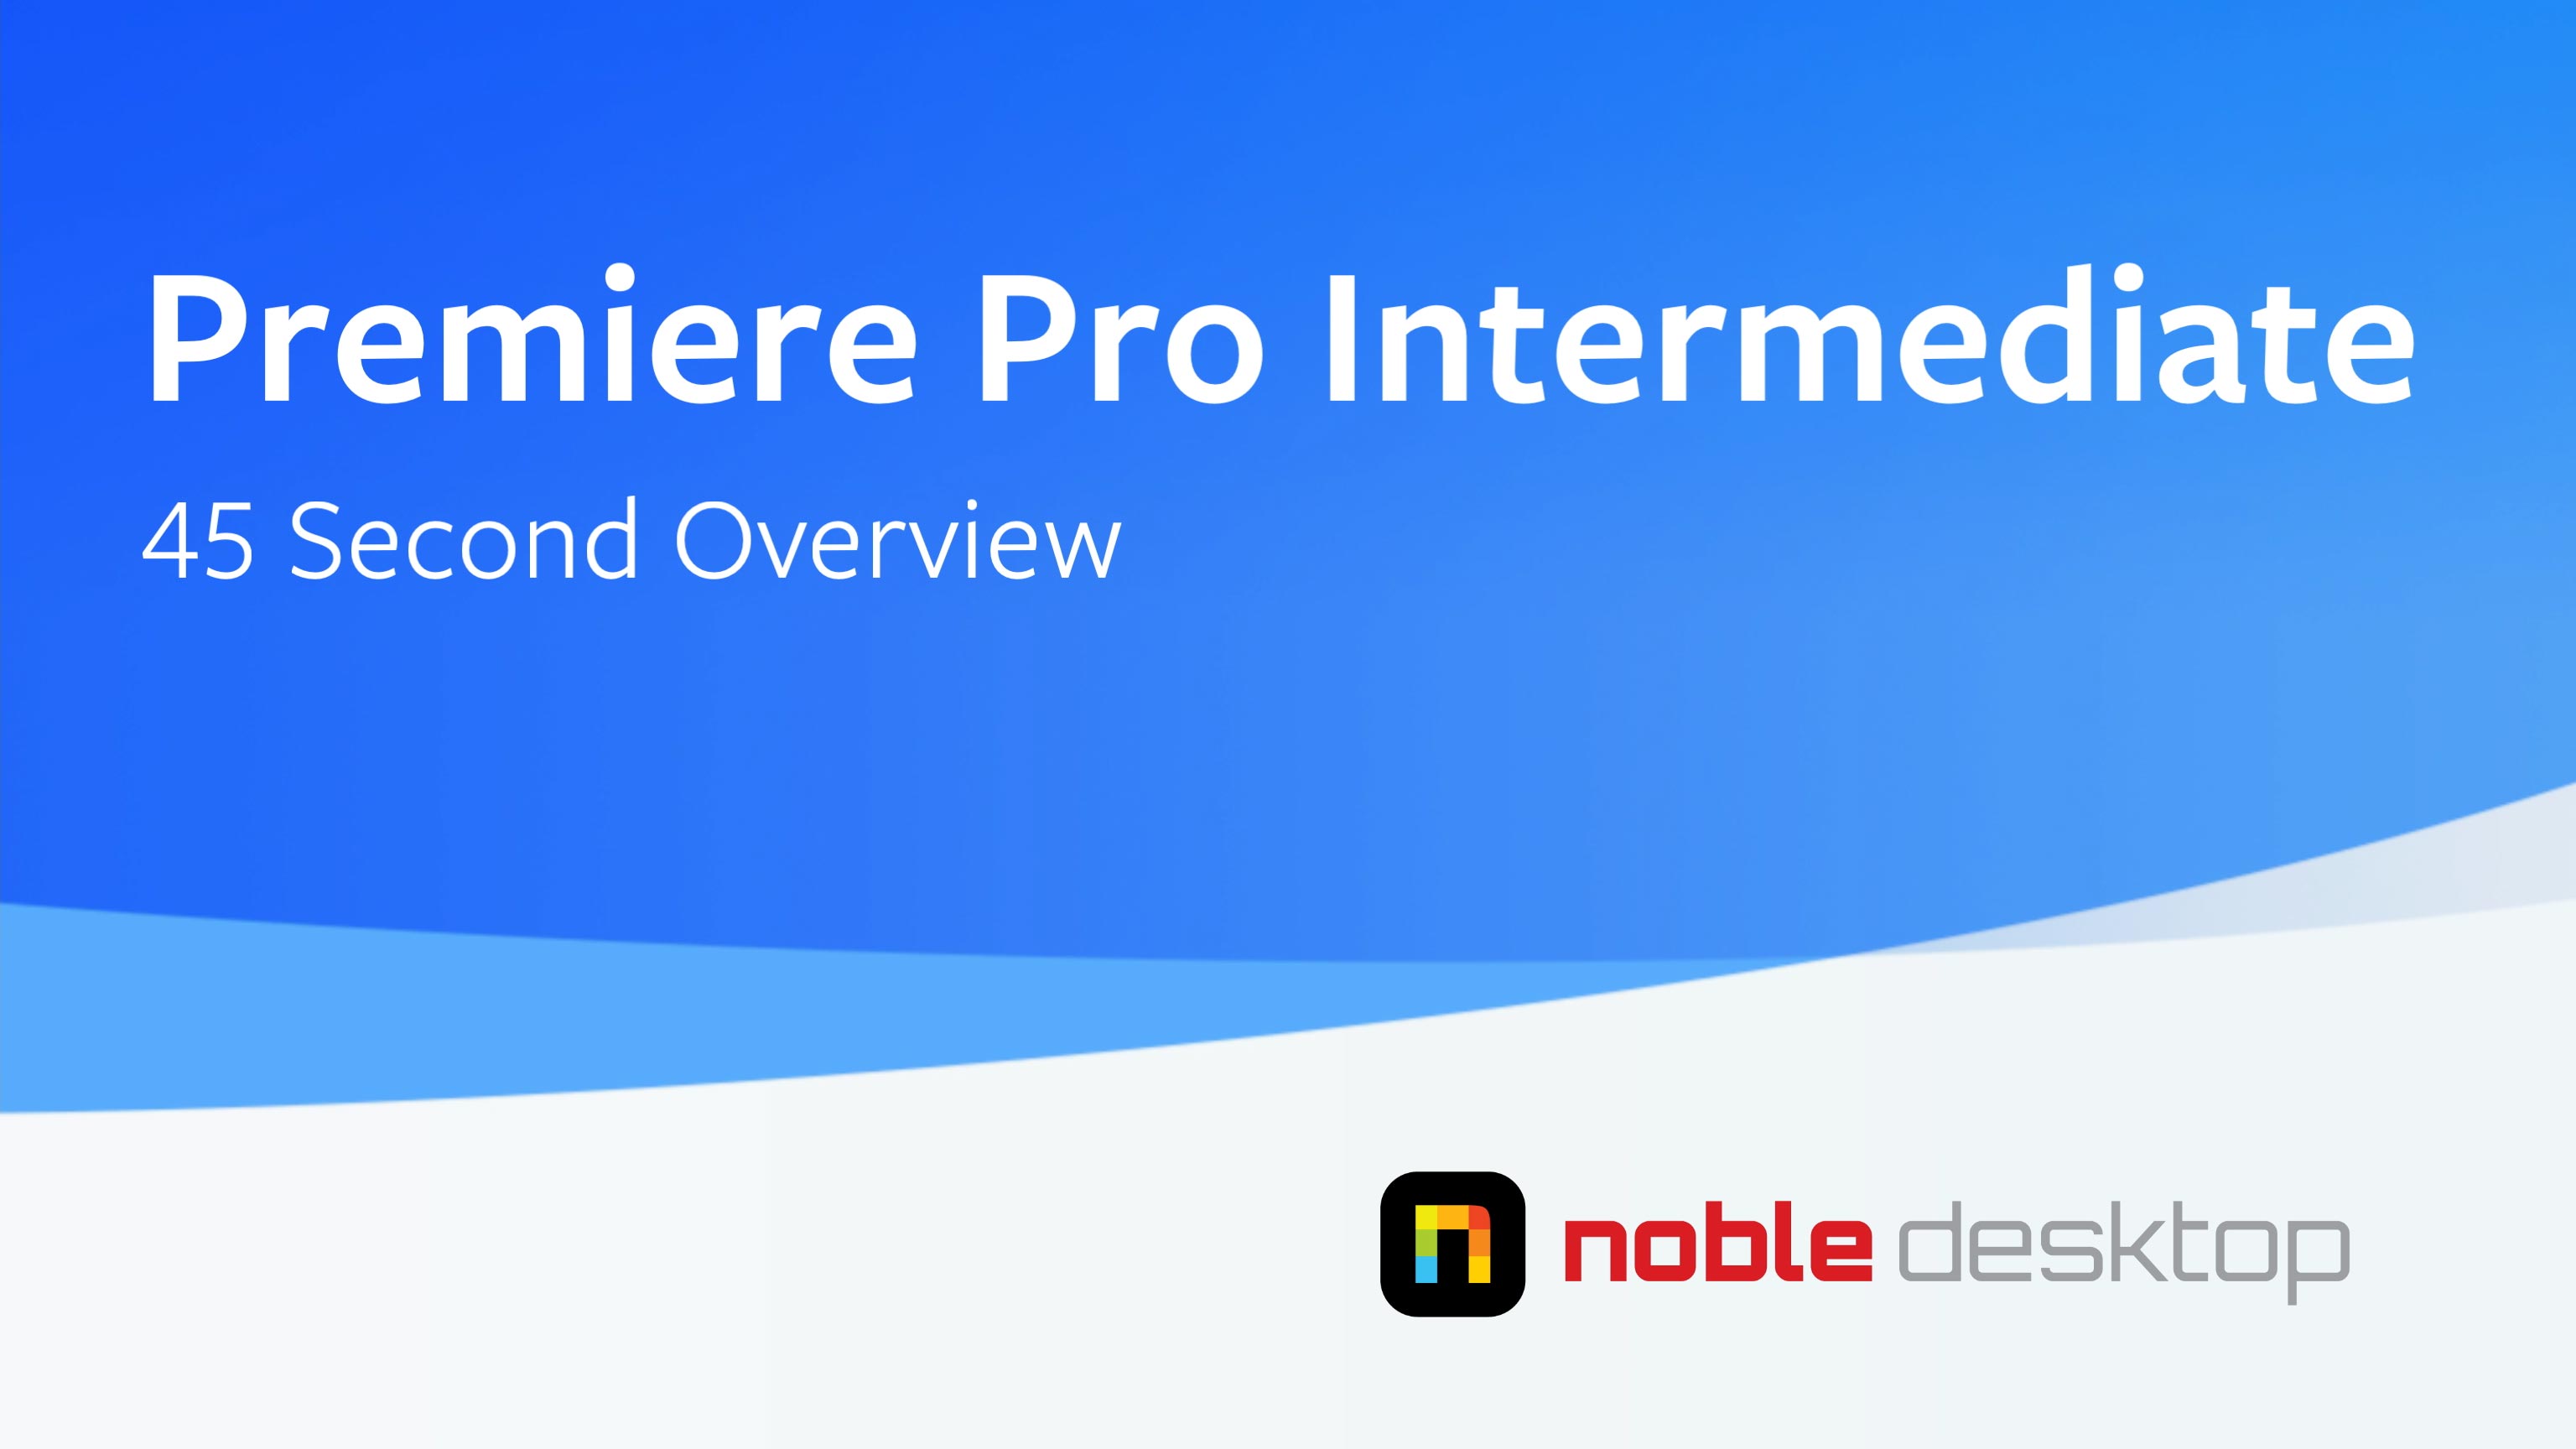 Premiere Pro Intermediate Class Overview